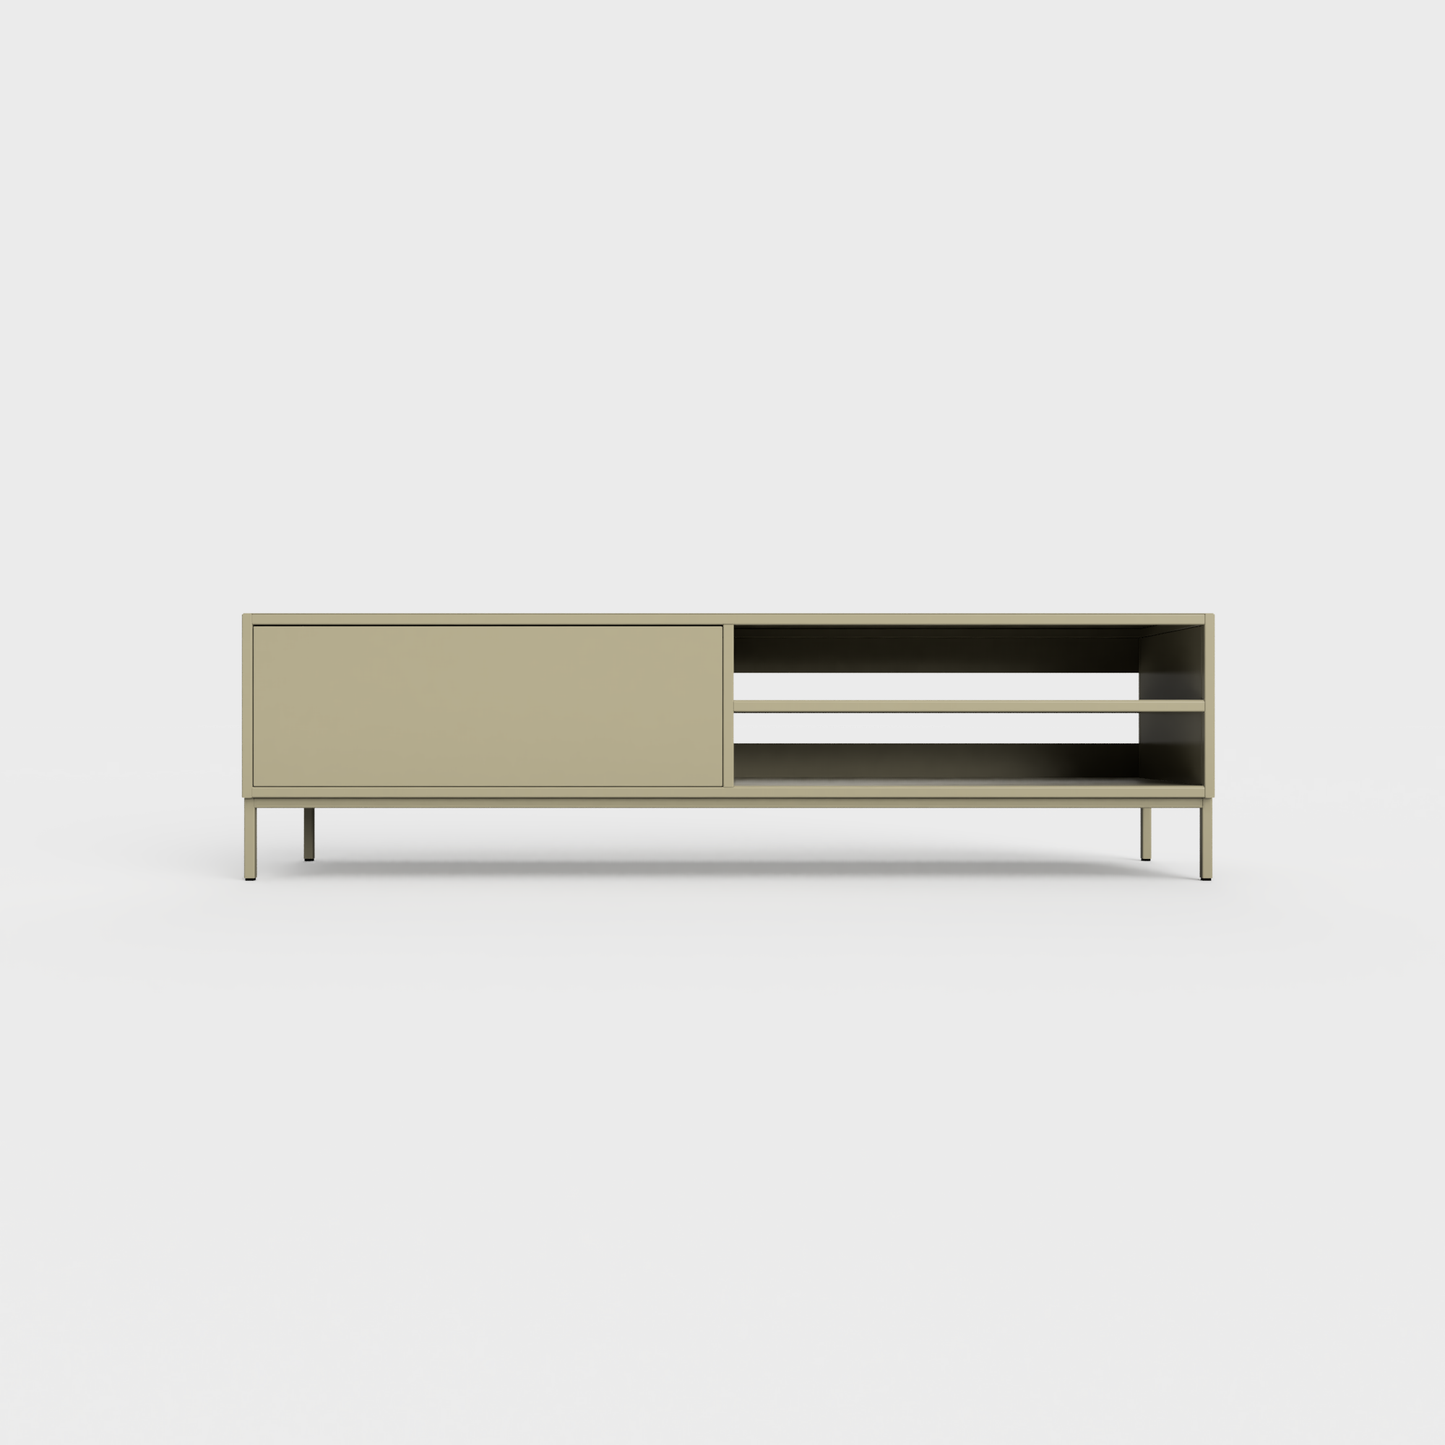 Prunus 02 Lowboard in Light Olive color, powder-coated steel, elegant and modern piece of furniture for your living room